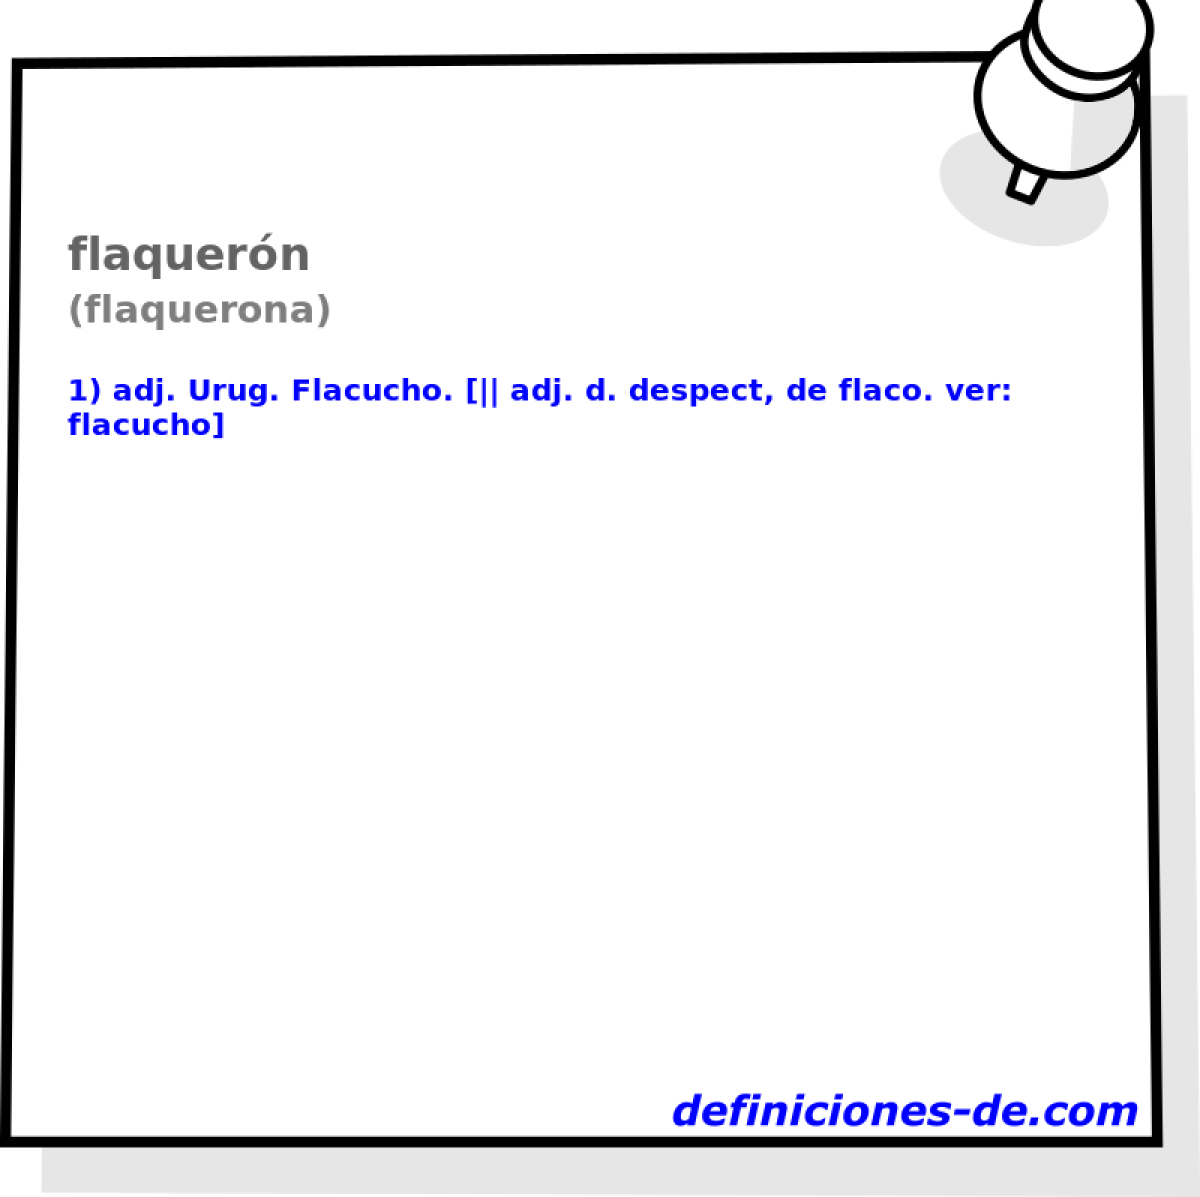 flaquern (flaquerona)